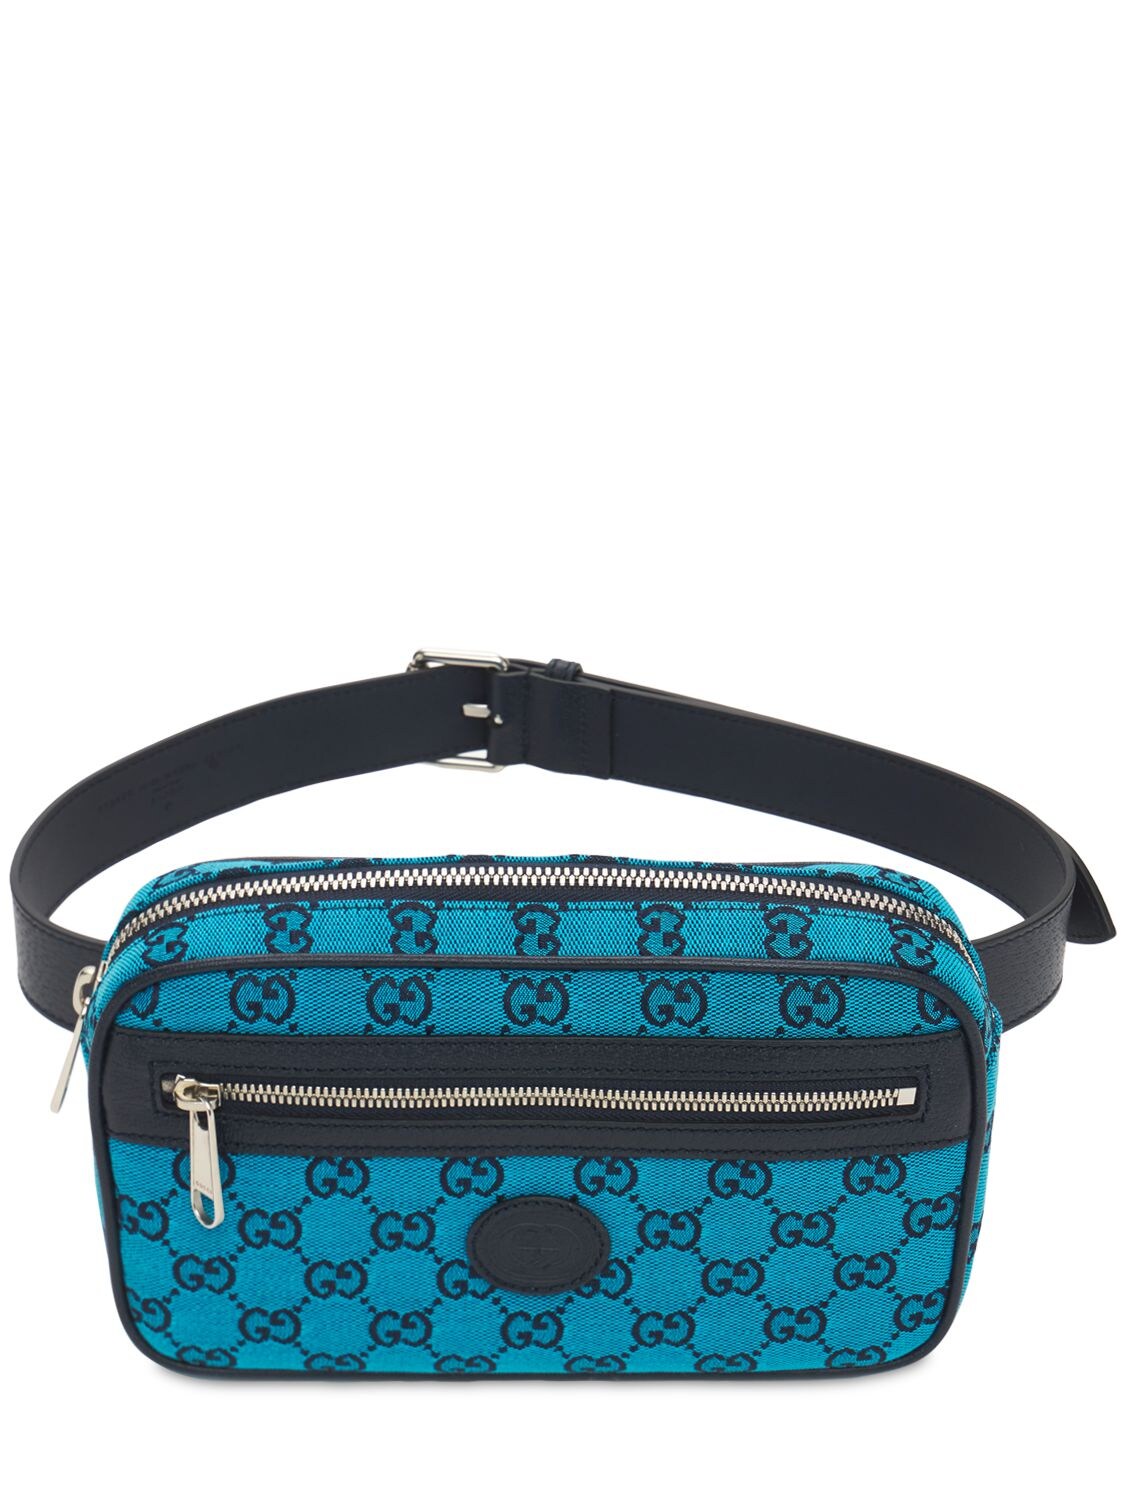 Gucci Gg Multicolor Canvas Belt Bag In Light Blue